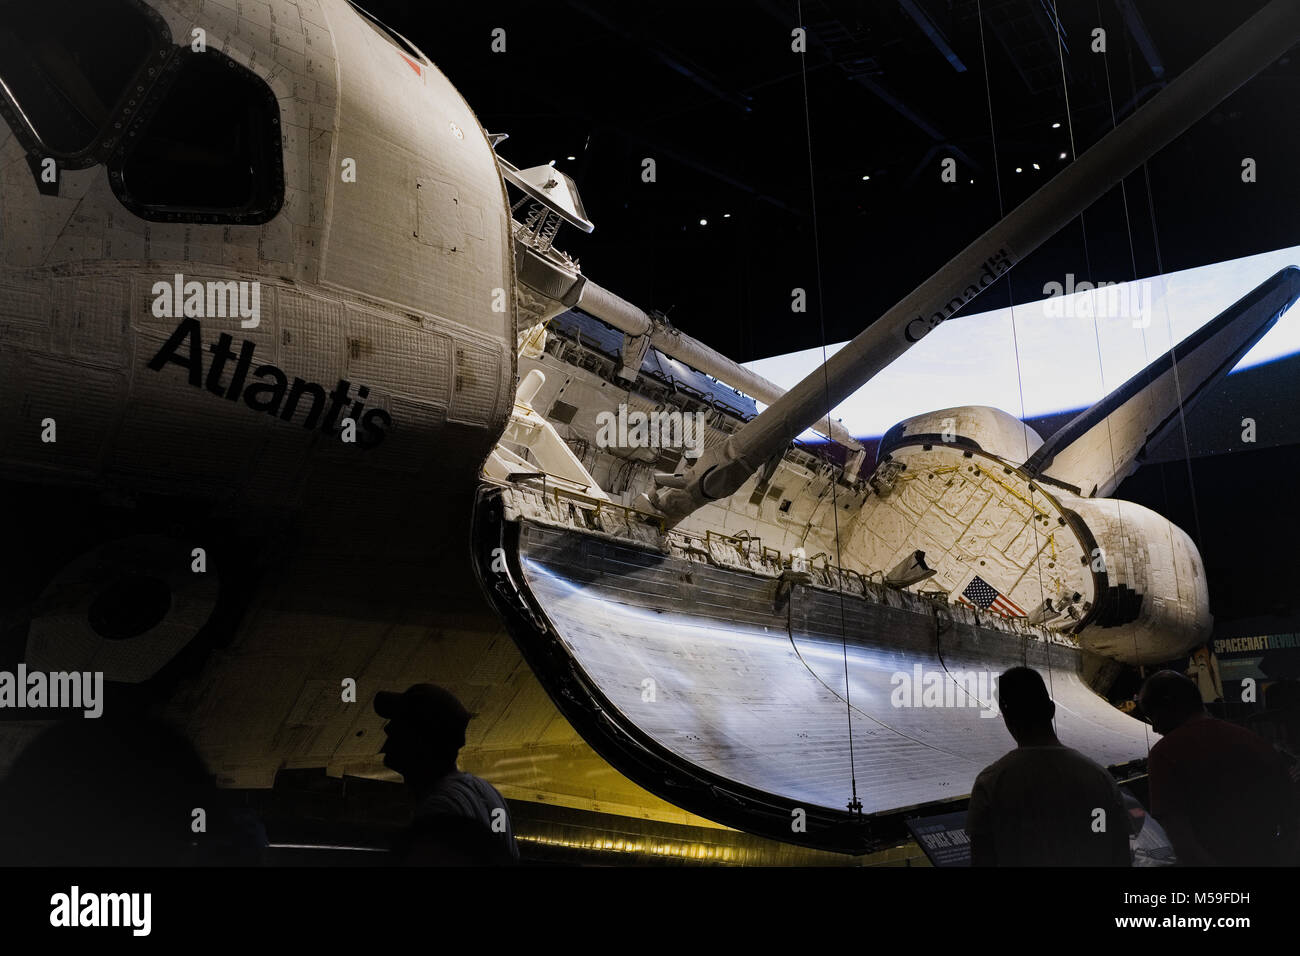 Space shuttle Atlantis at Kennedy Space Centre, Orlando, Florida, North America Stock Photo